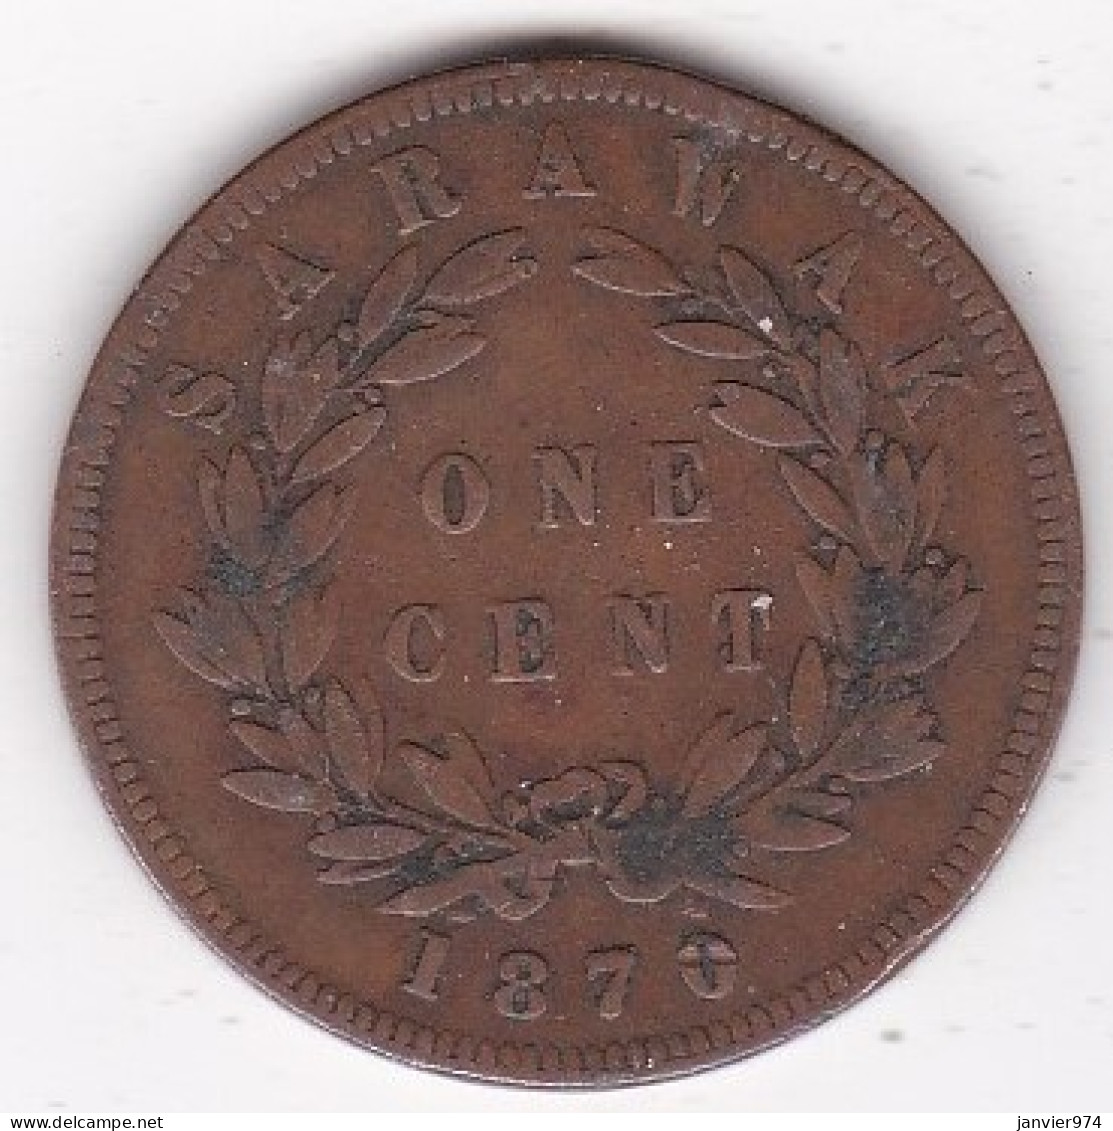 Sarawak . One Cent 1870 . C. BROOKE RAJAH. KM# 6 - Malesia